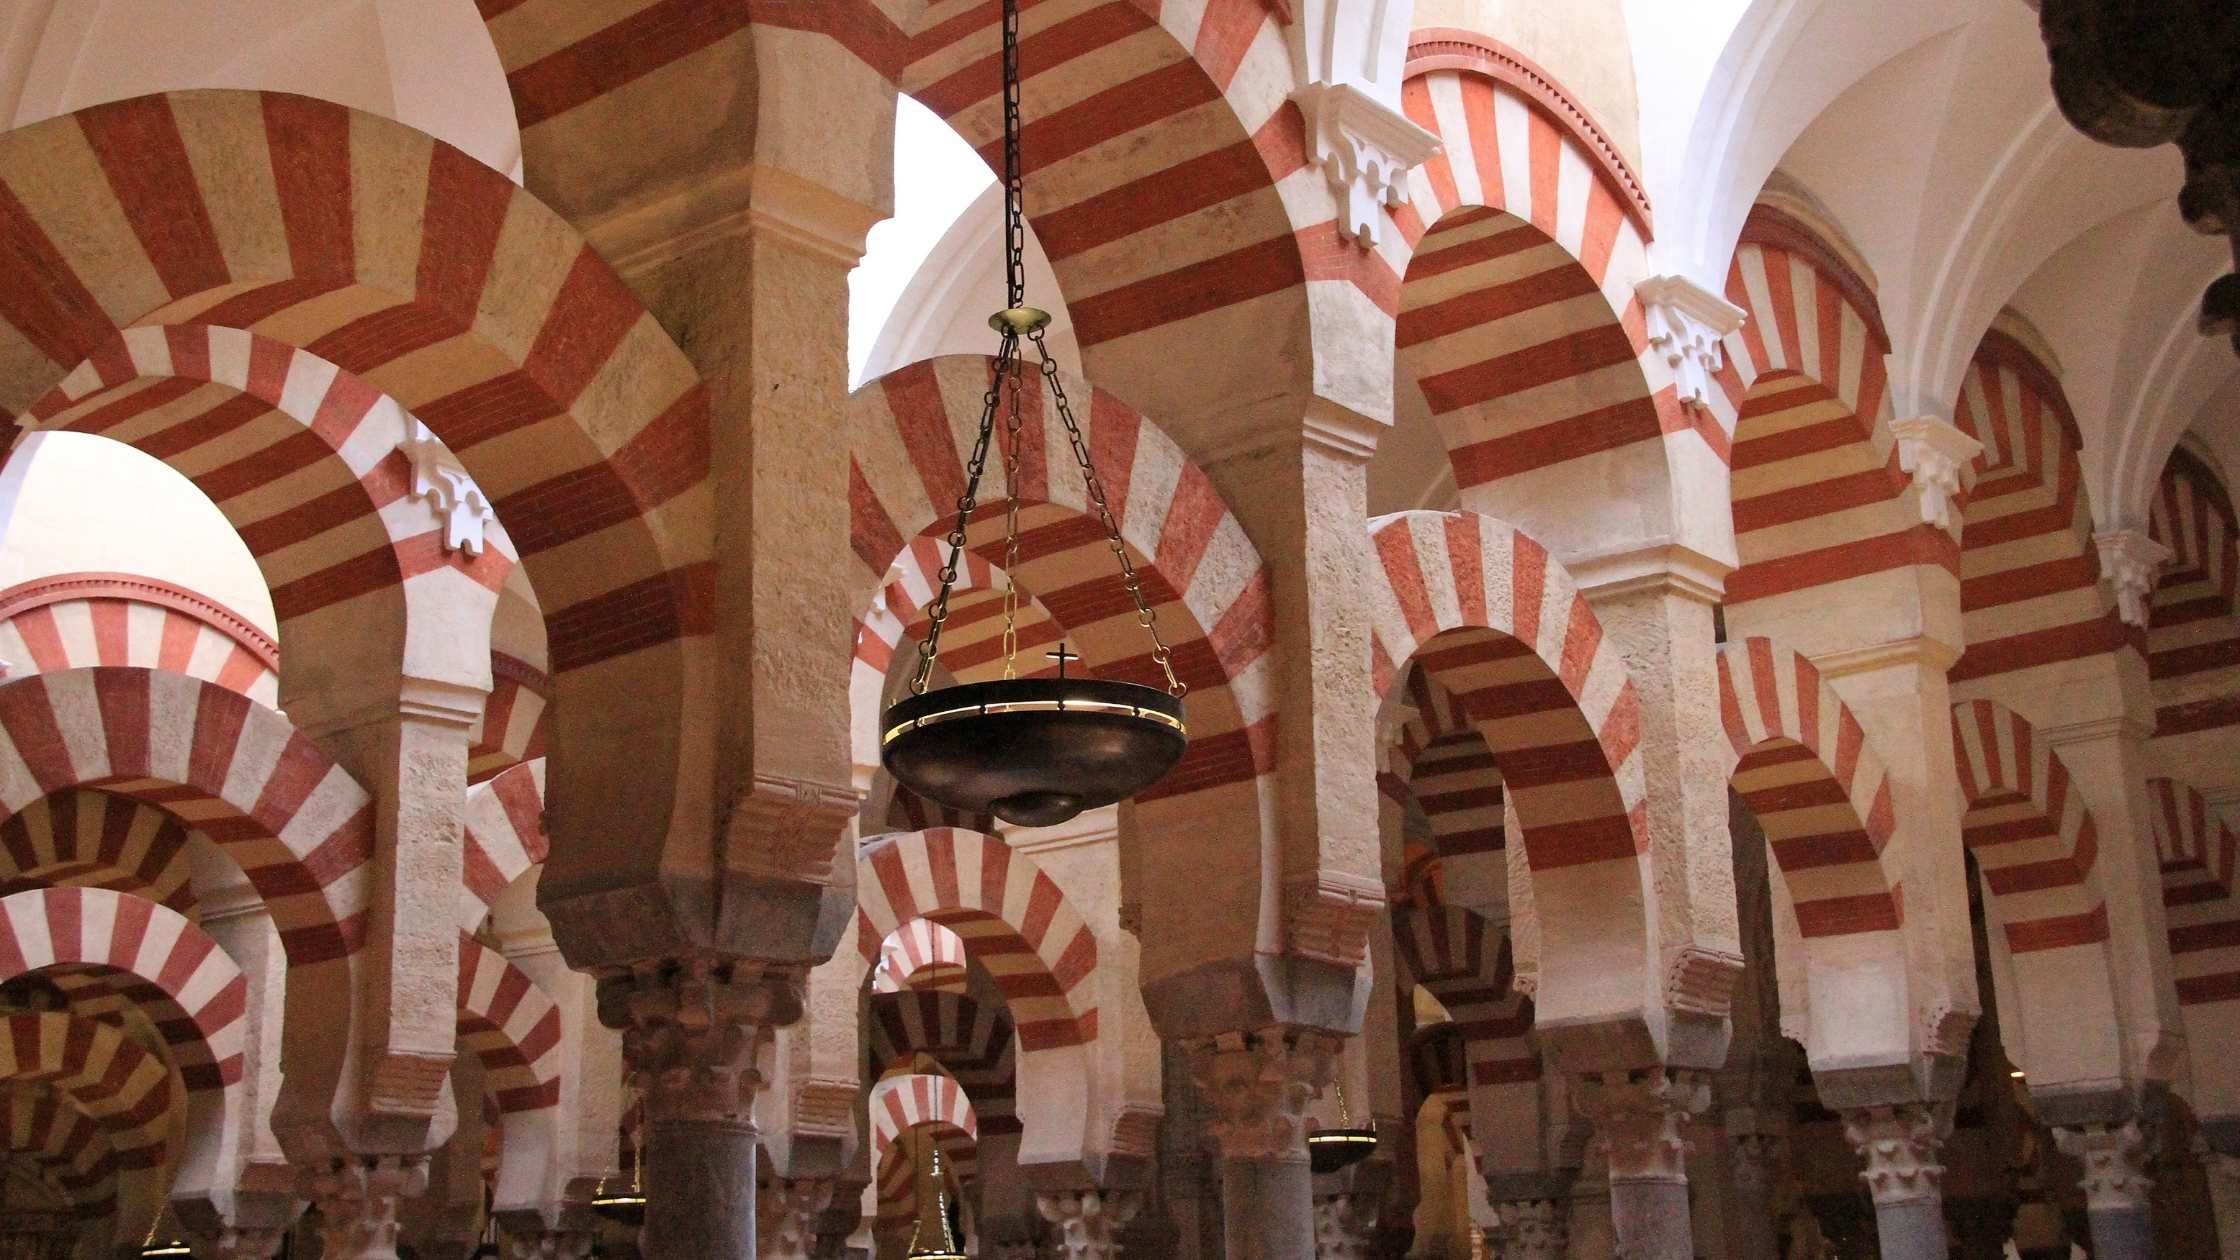 Mezquita mosque in Cordova, Spain